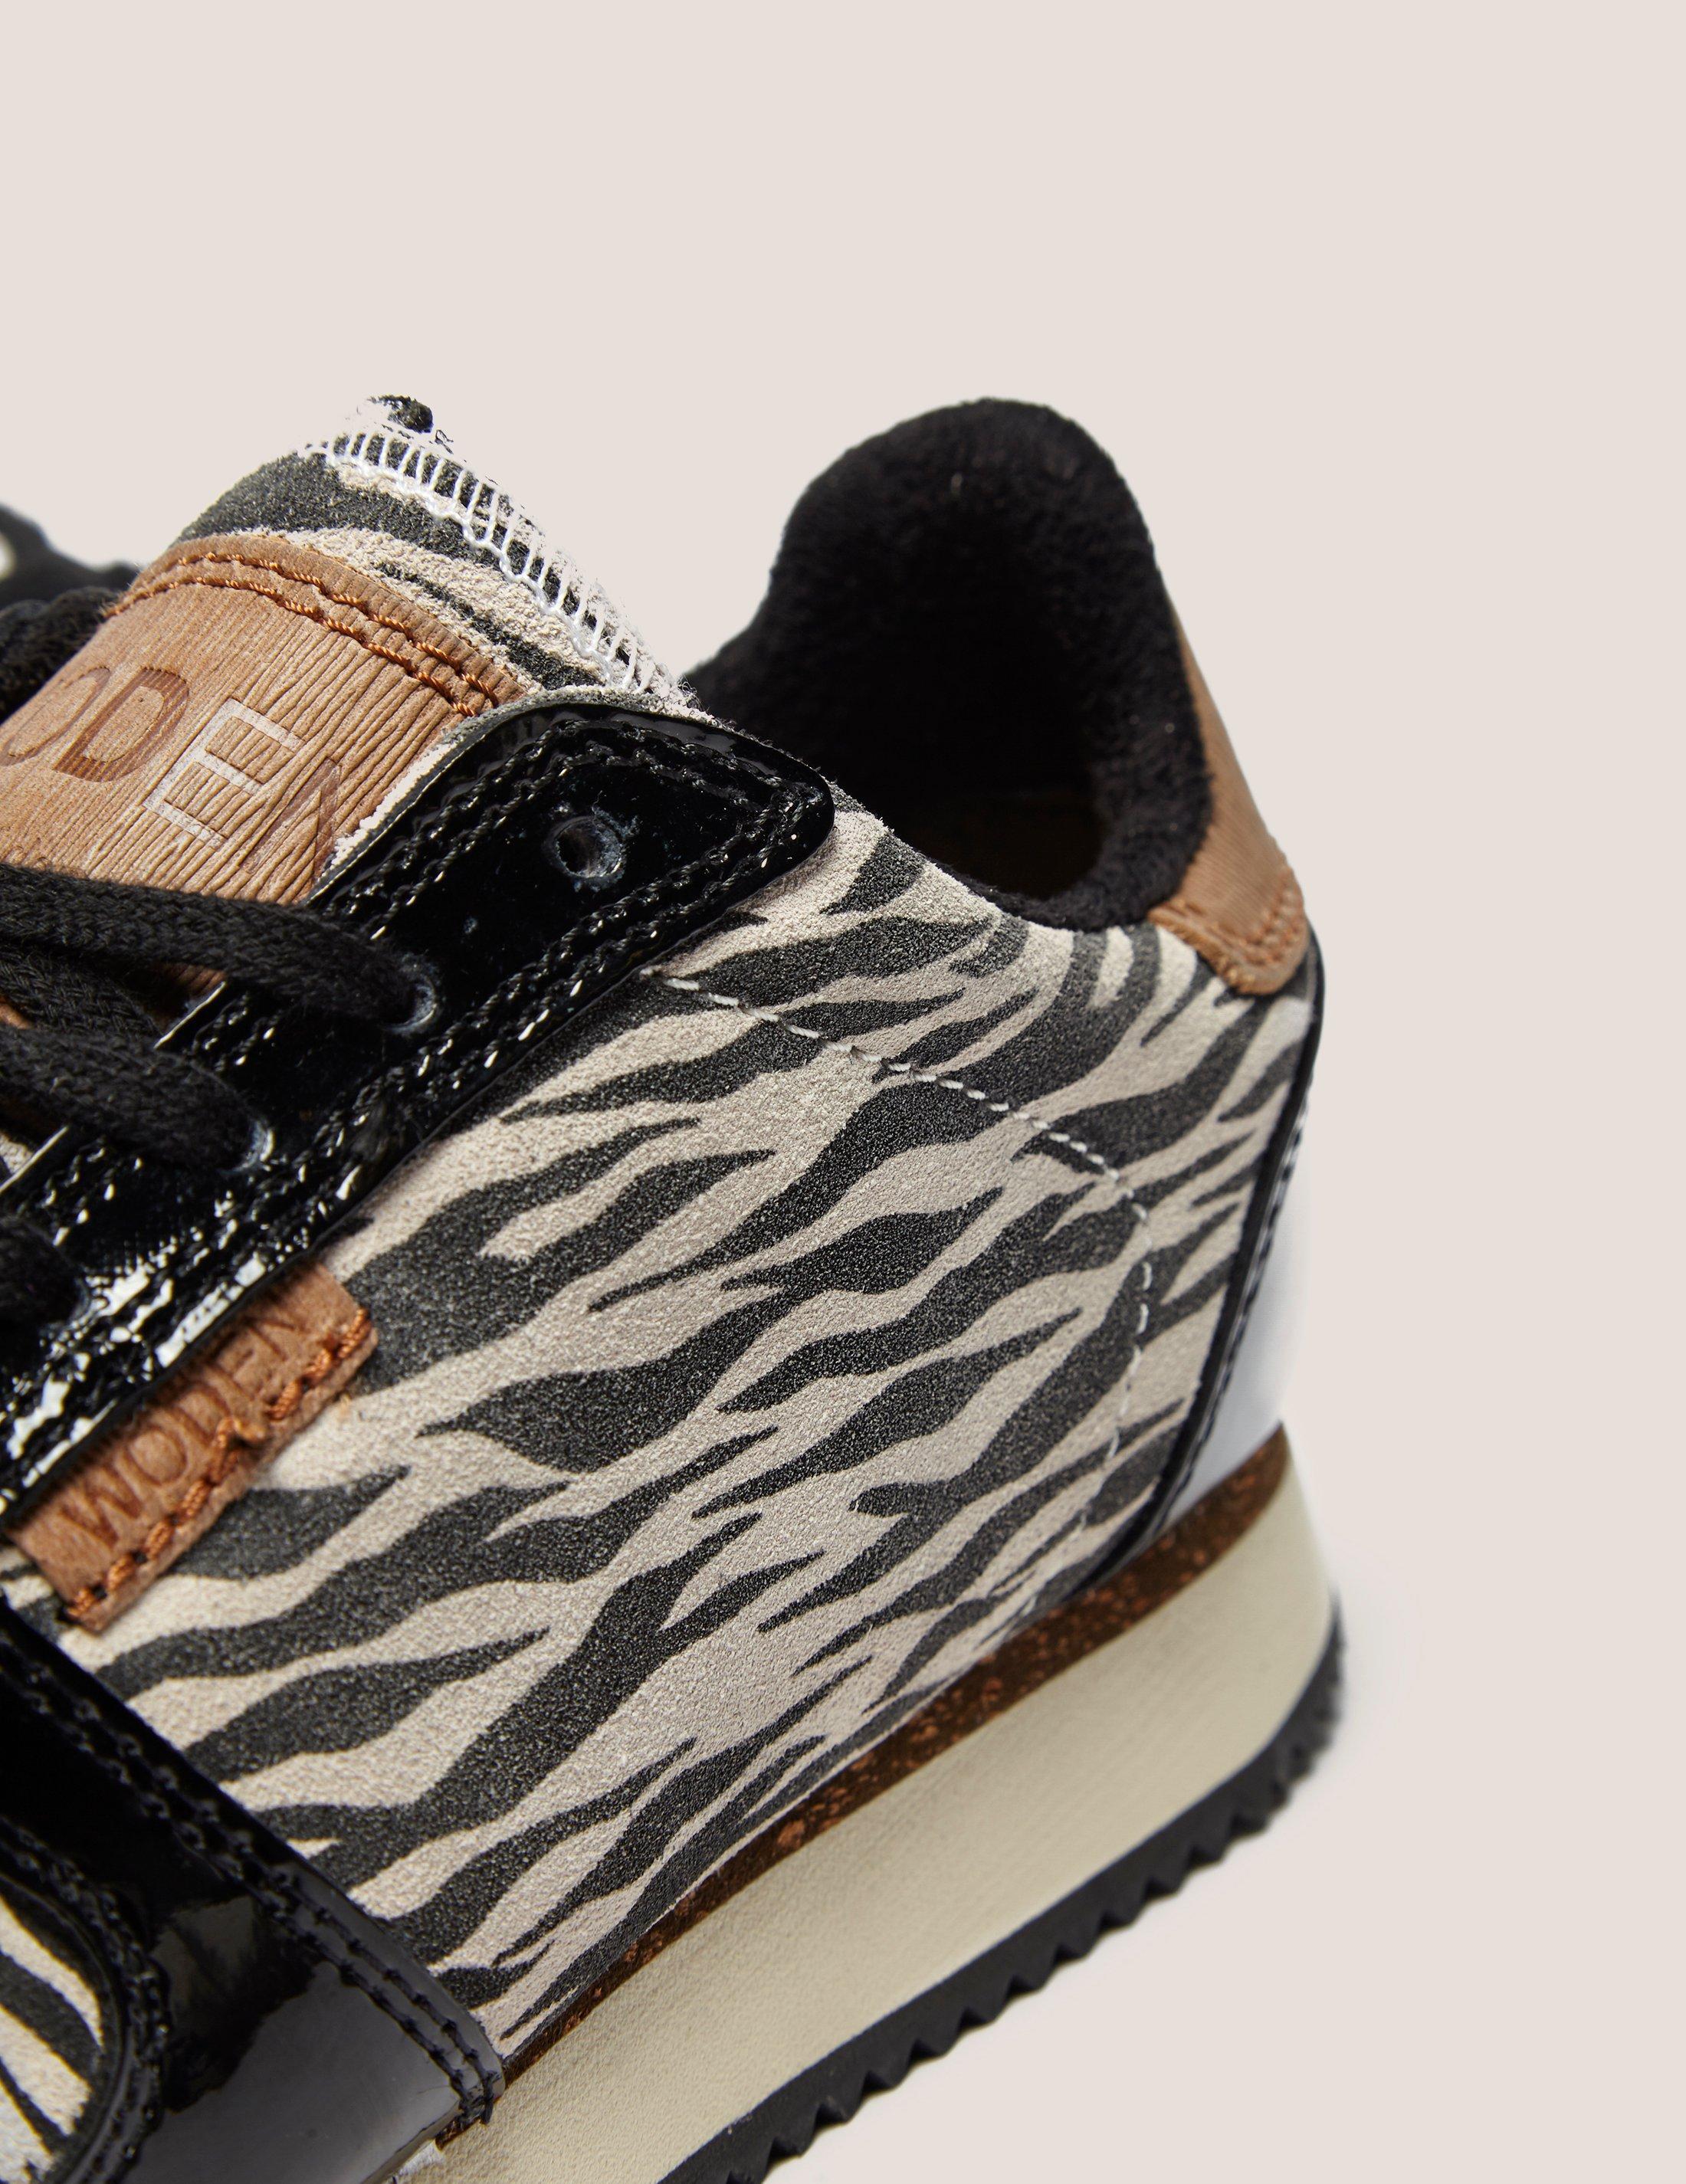 woden zebra sneakers